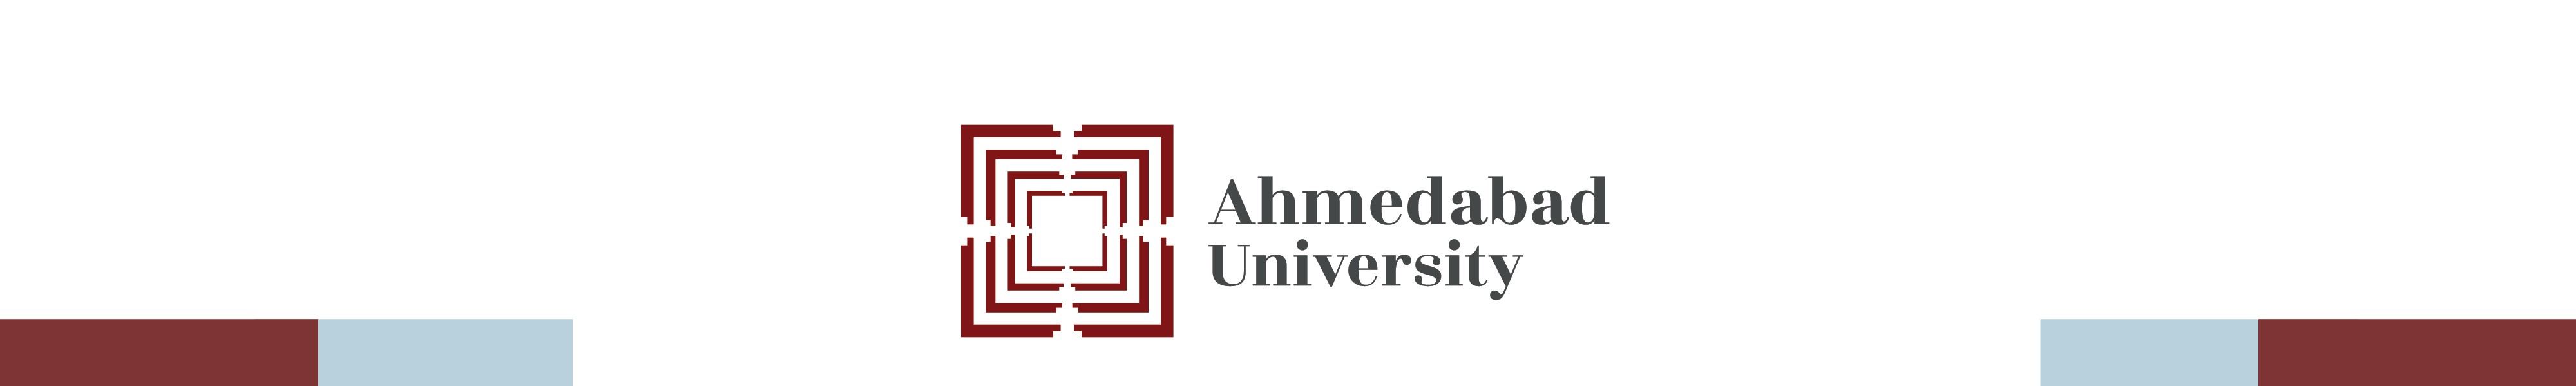 Ahmedabad University on X: 